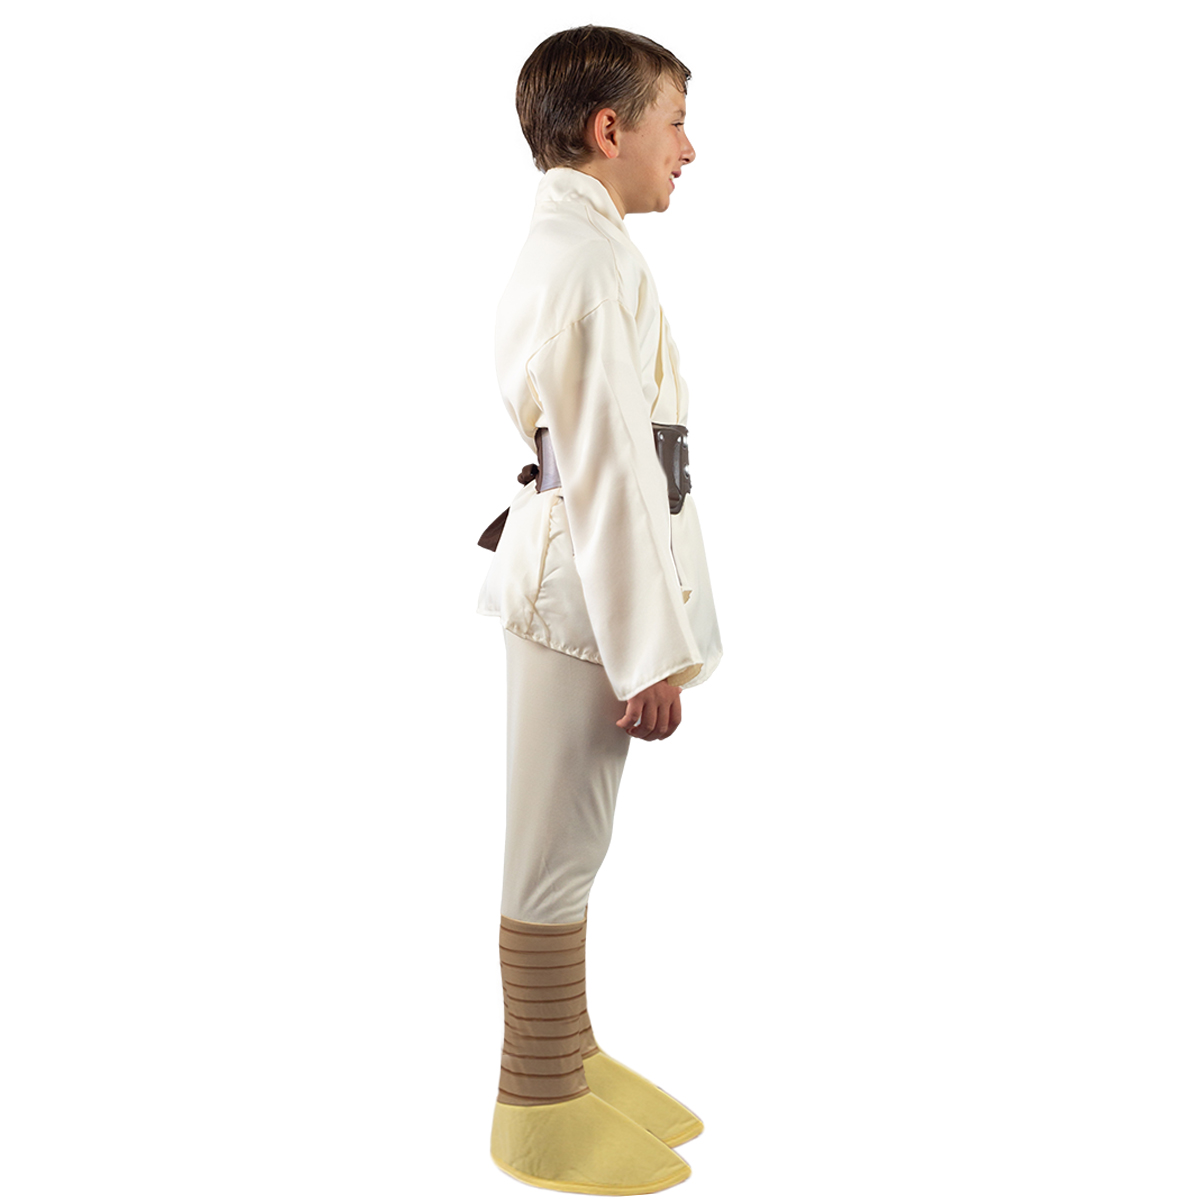 Rubie's Deluxe Luke Skywalker Halloween Fancy-Dress Costume for Child, Little Boys S - image 2 of 6